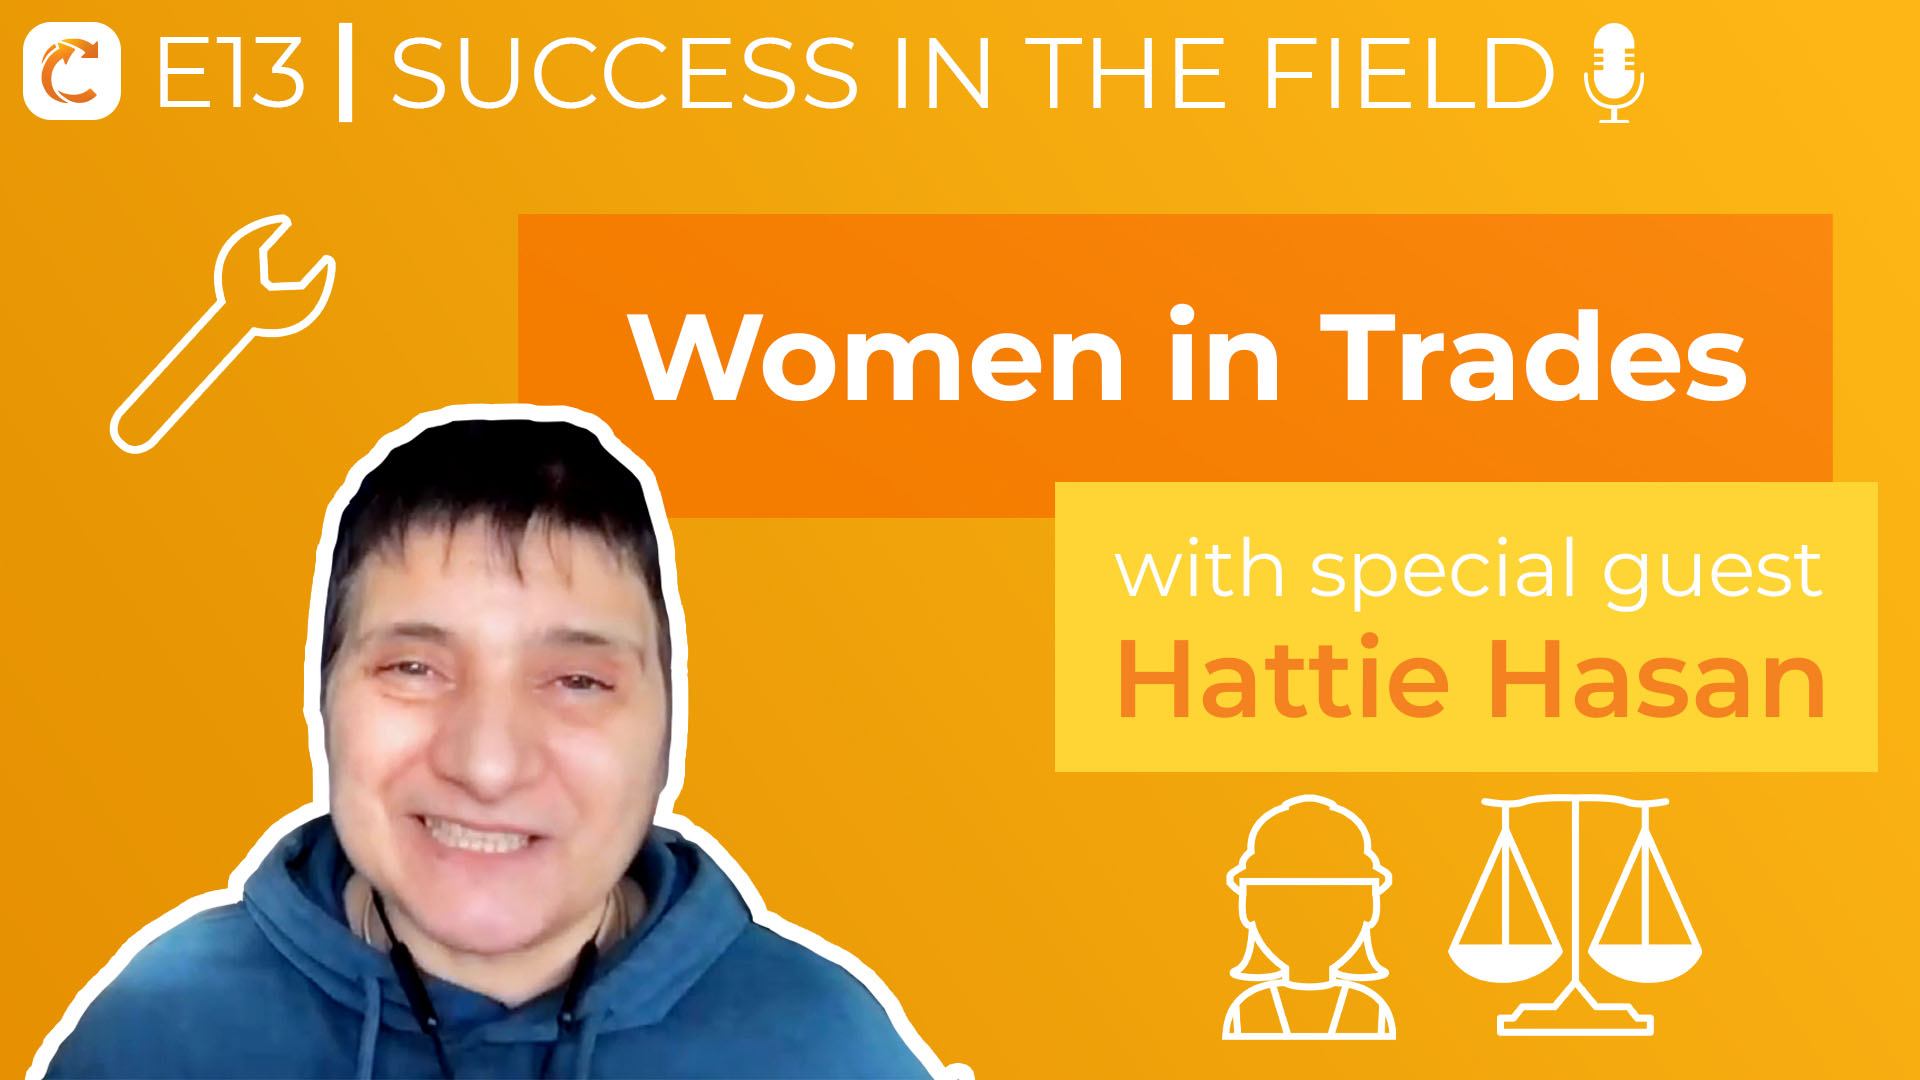 success in the field women in trades hattie hasan cover